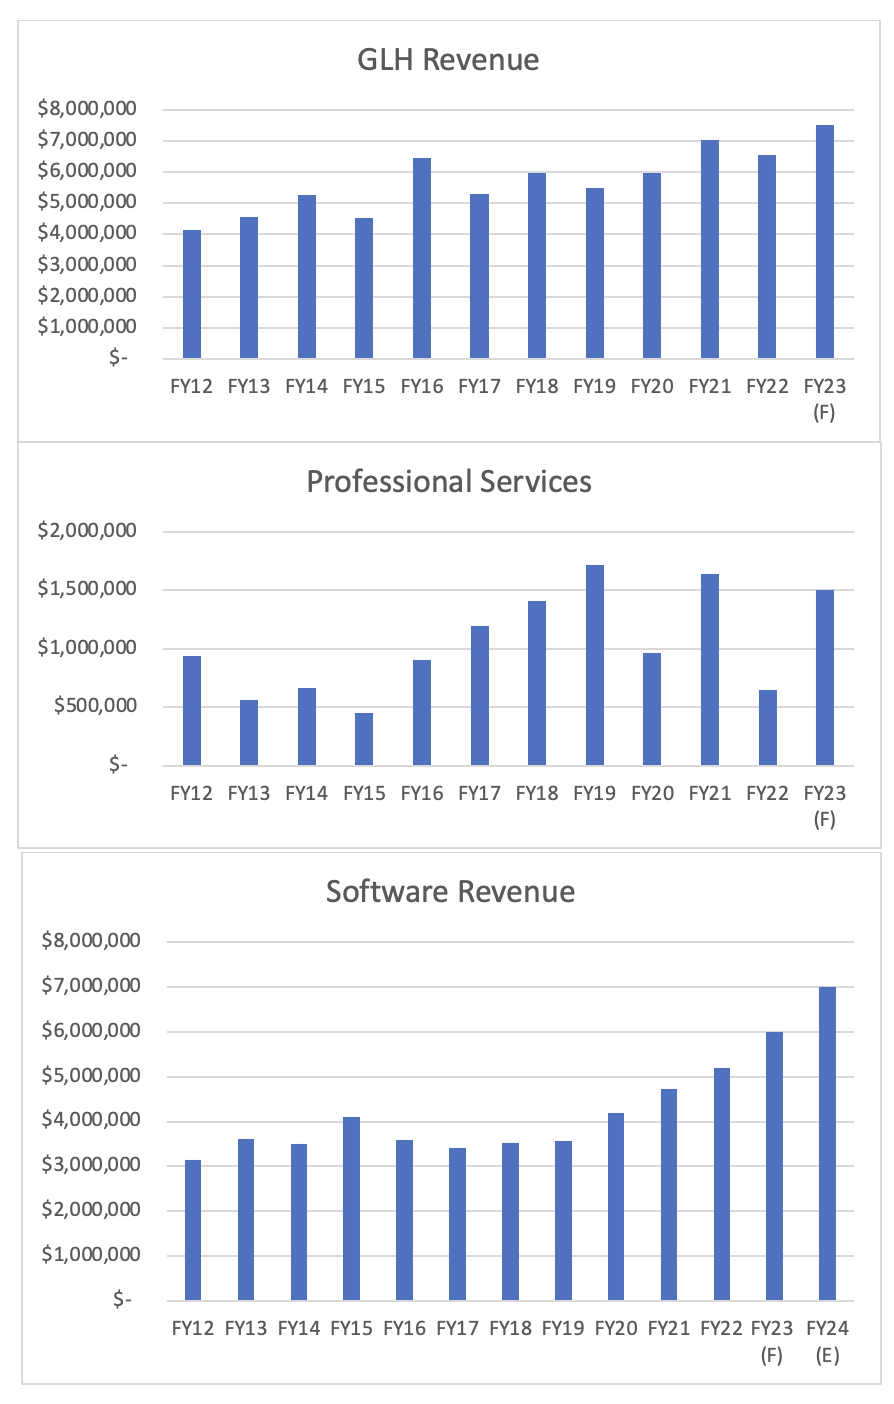 GLH Total Revenue, Professional Services Revenue and Software Revenue